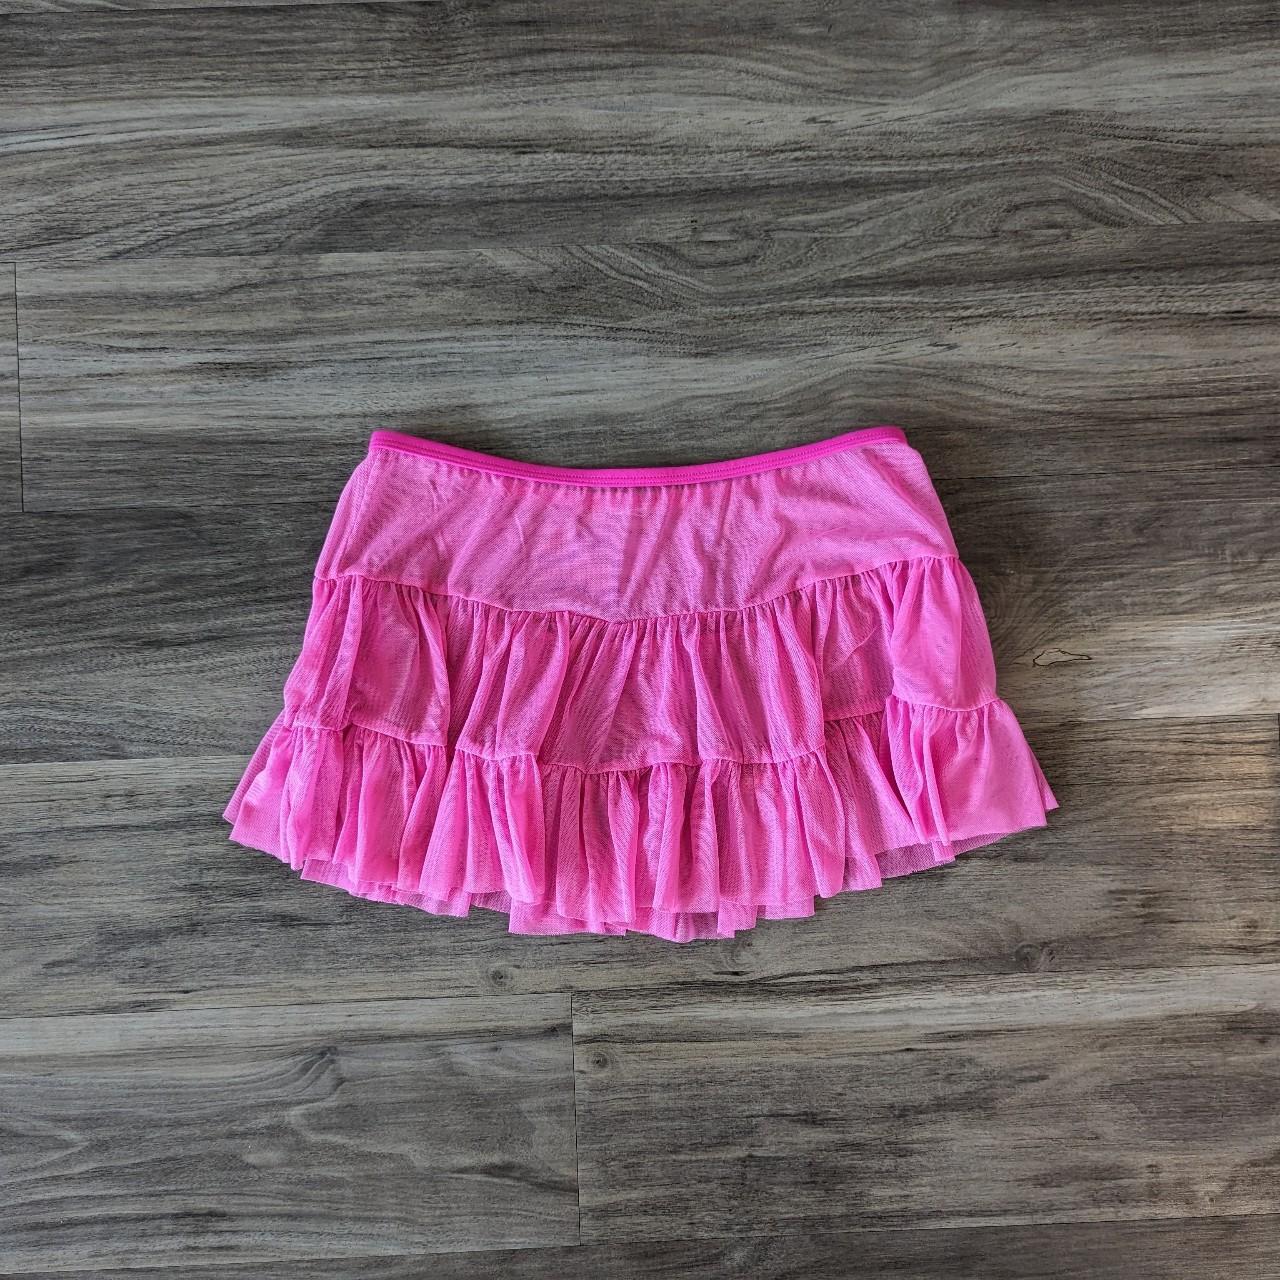 Pink sheer micro mini raver skirt Unlined, sheer.... - Depop